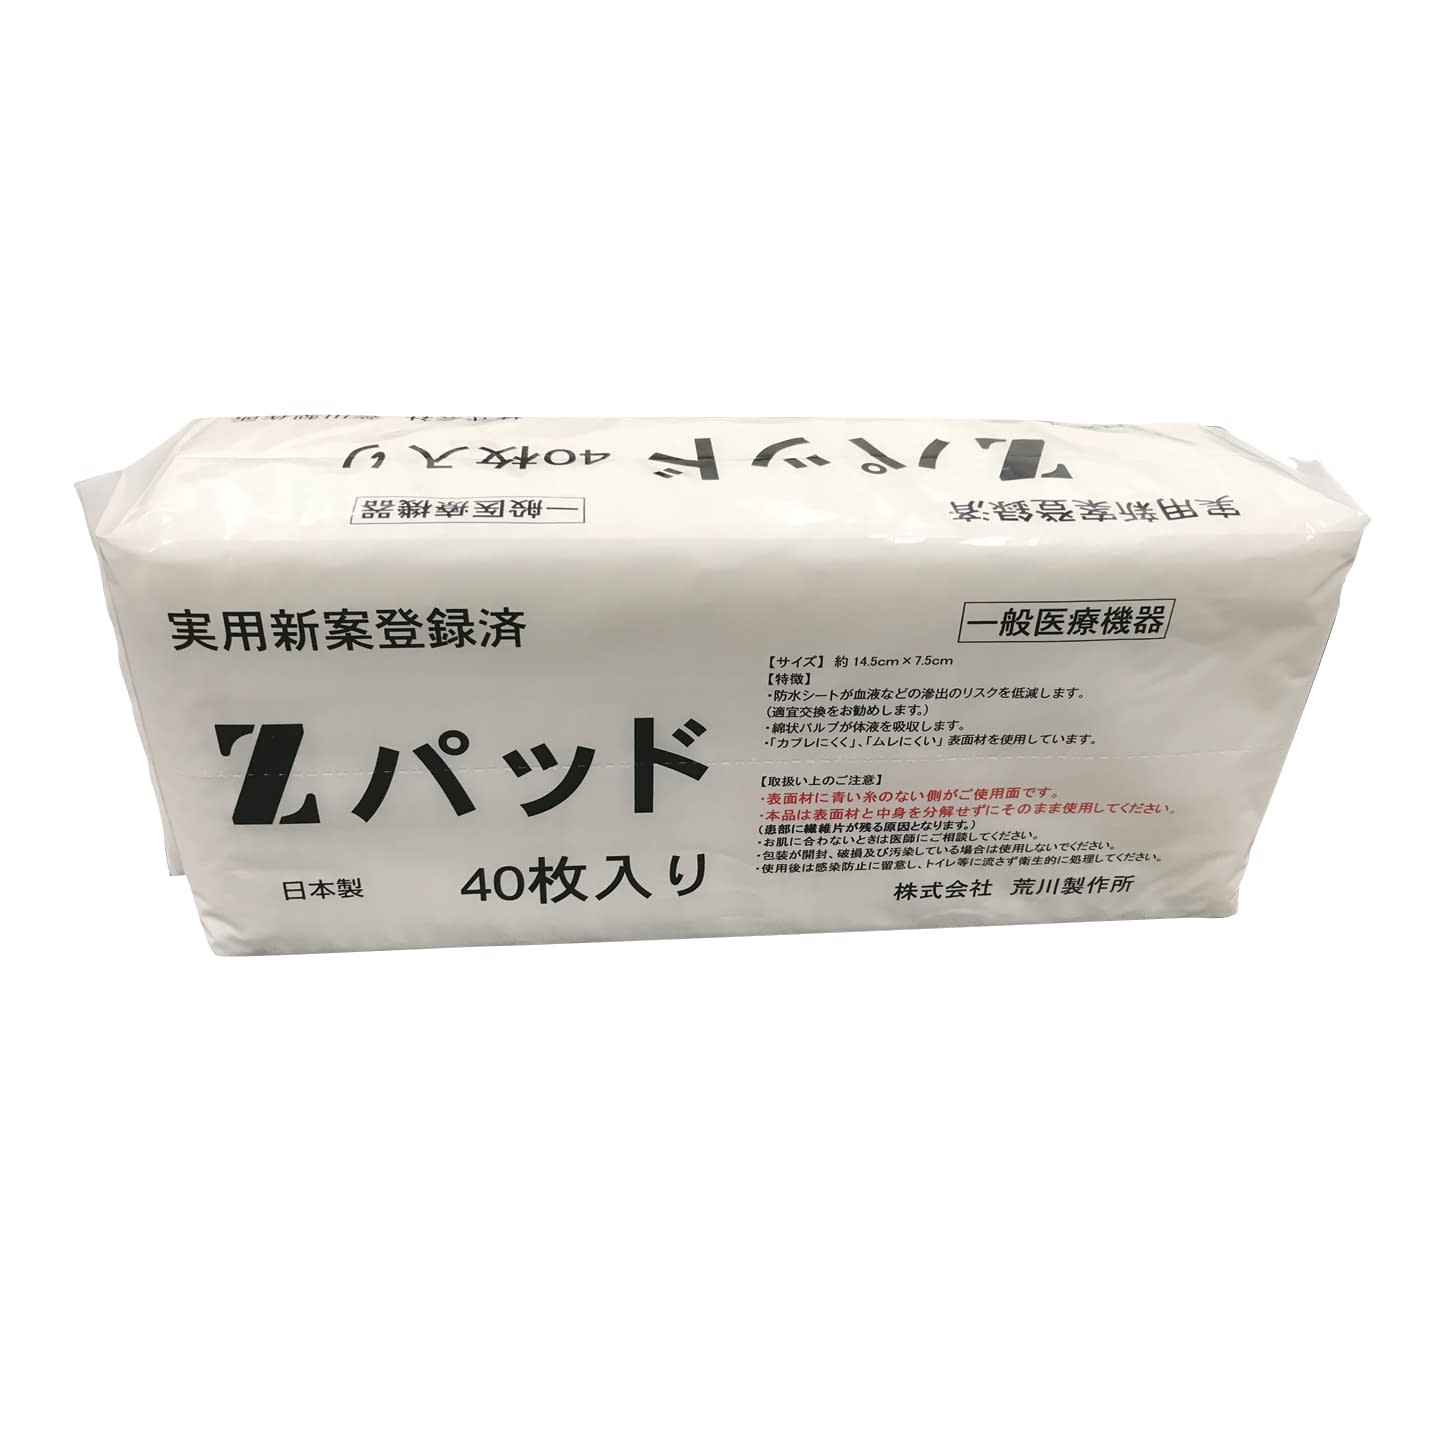 (24-6826-00)Ｚパッド（テープなし） AT-ZP001(40ﾏｲ) ｾﾞｯﾄﾊﾟｯﾄﾞ(ﾃｰﾌﾟﾅｼ)【24袋単位】【2019年カタログ商品】